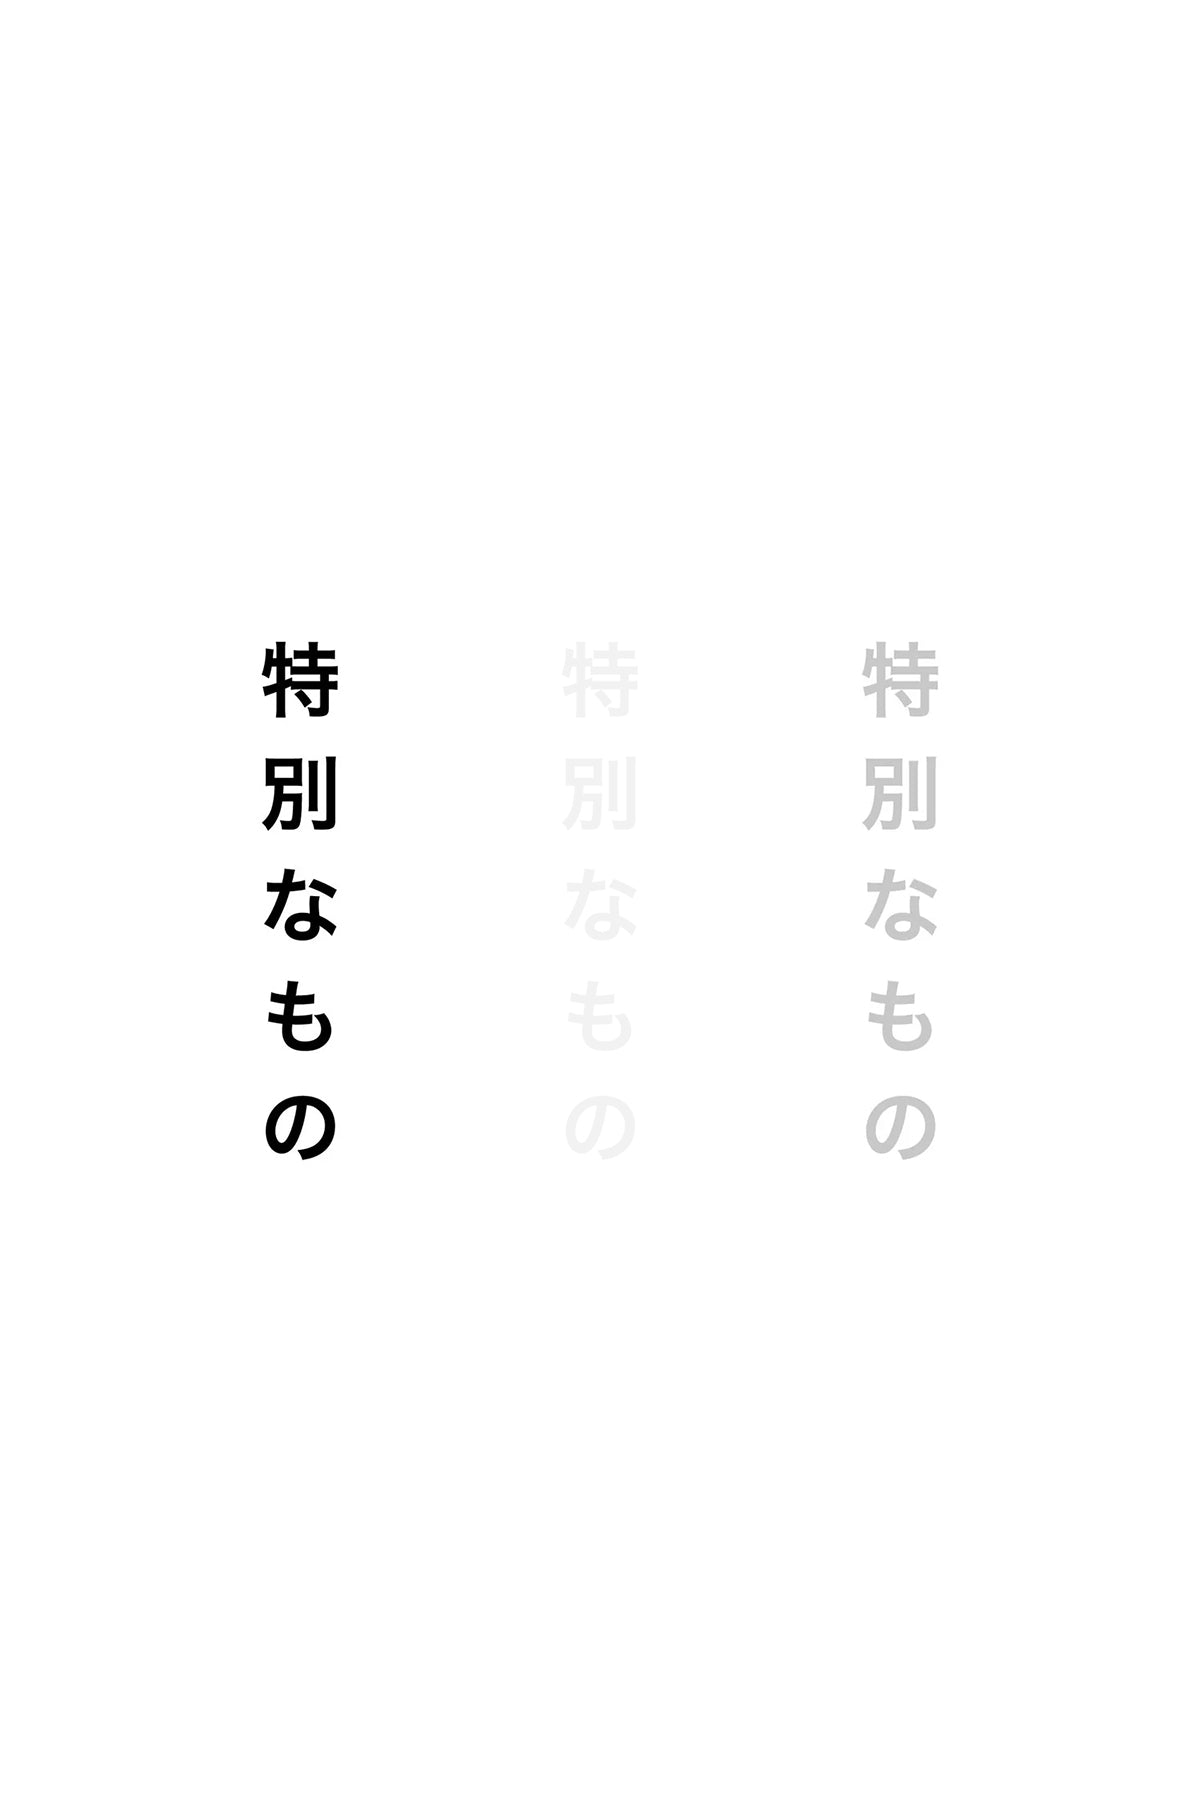 Vertical Kanji Decal